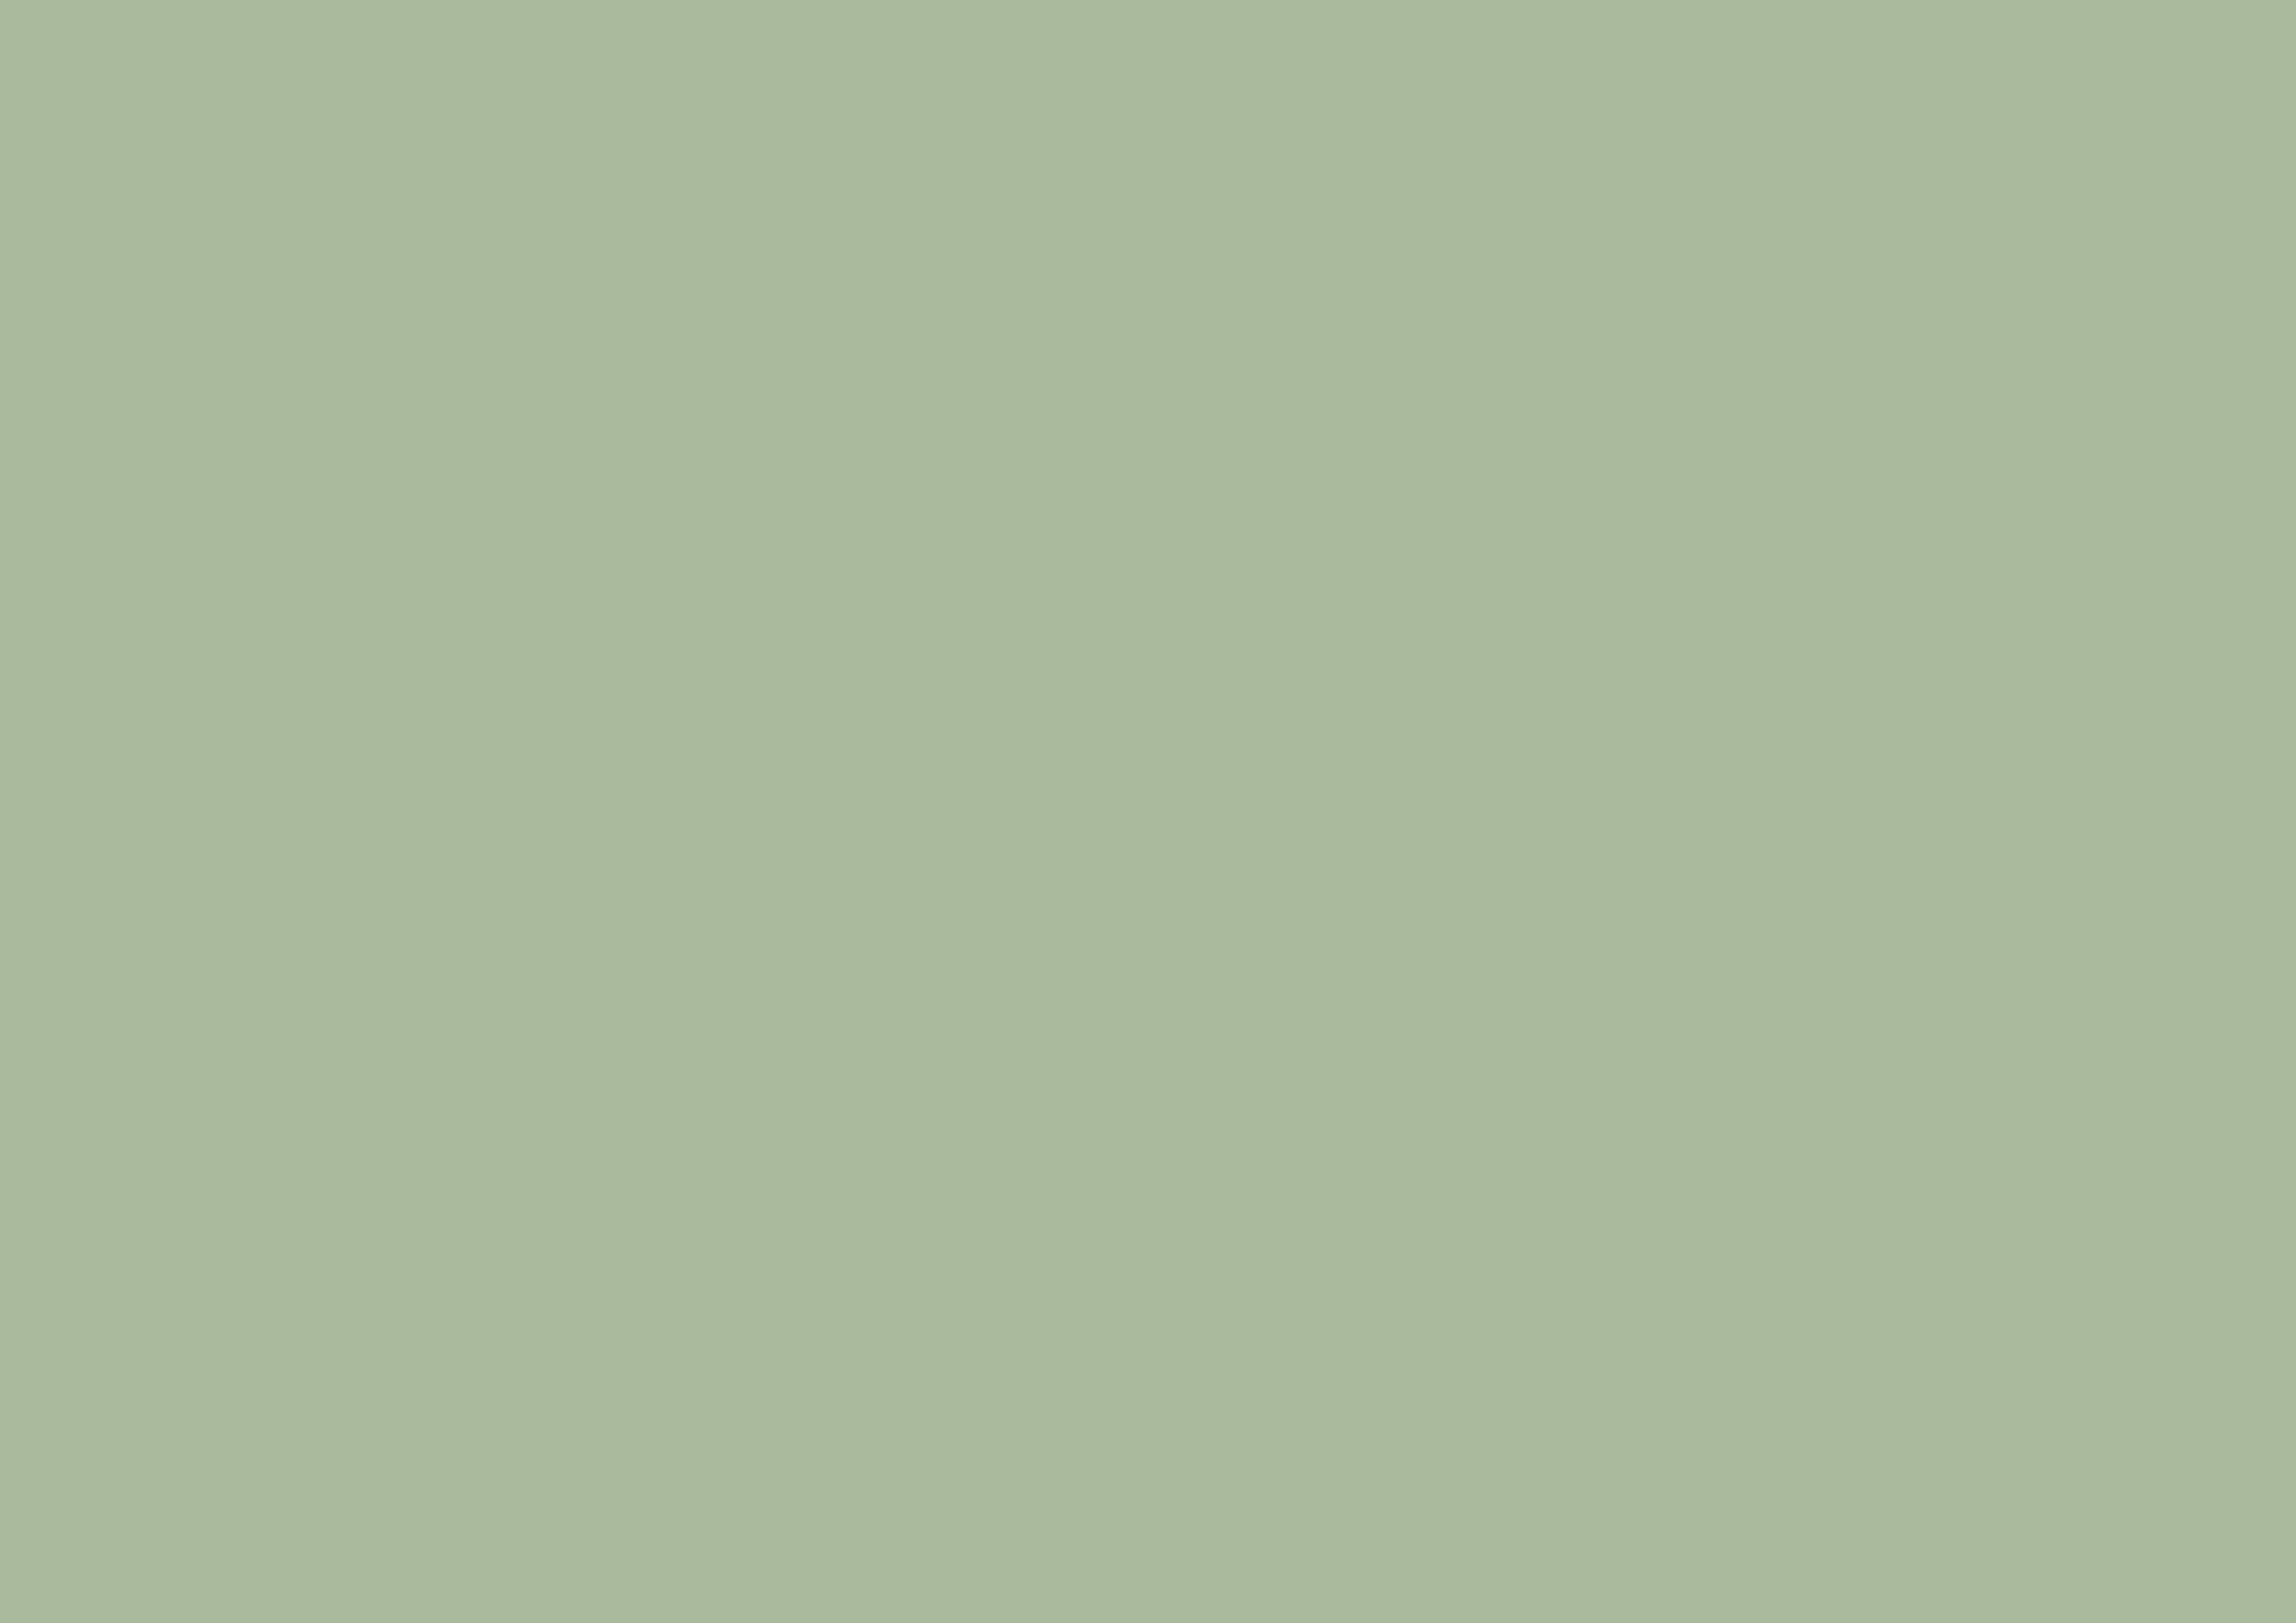 3508x2480 Laurel Green Solid Color Background